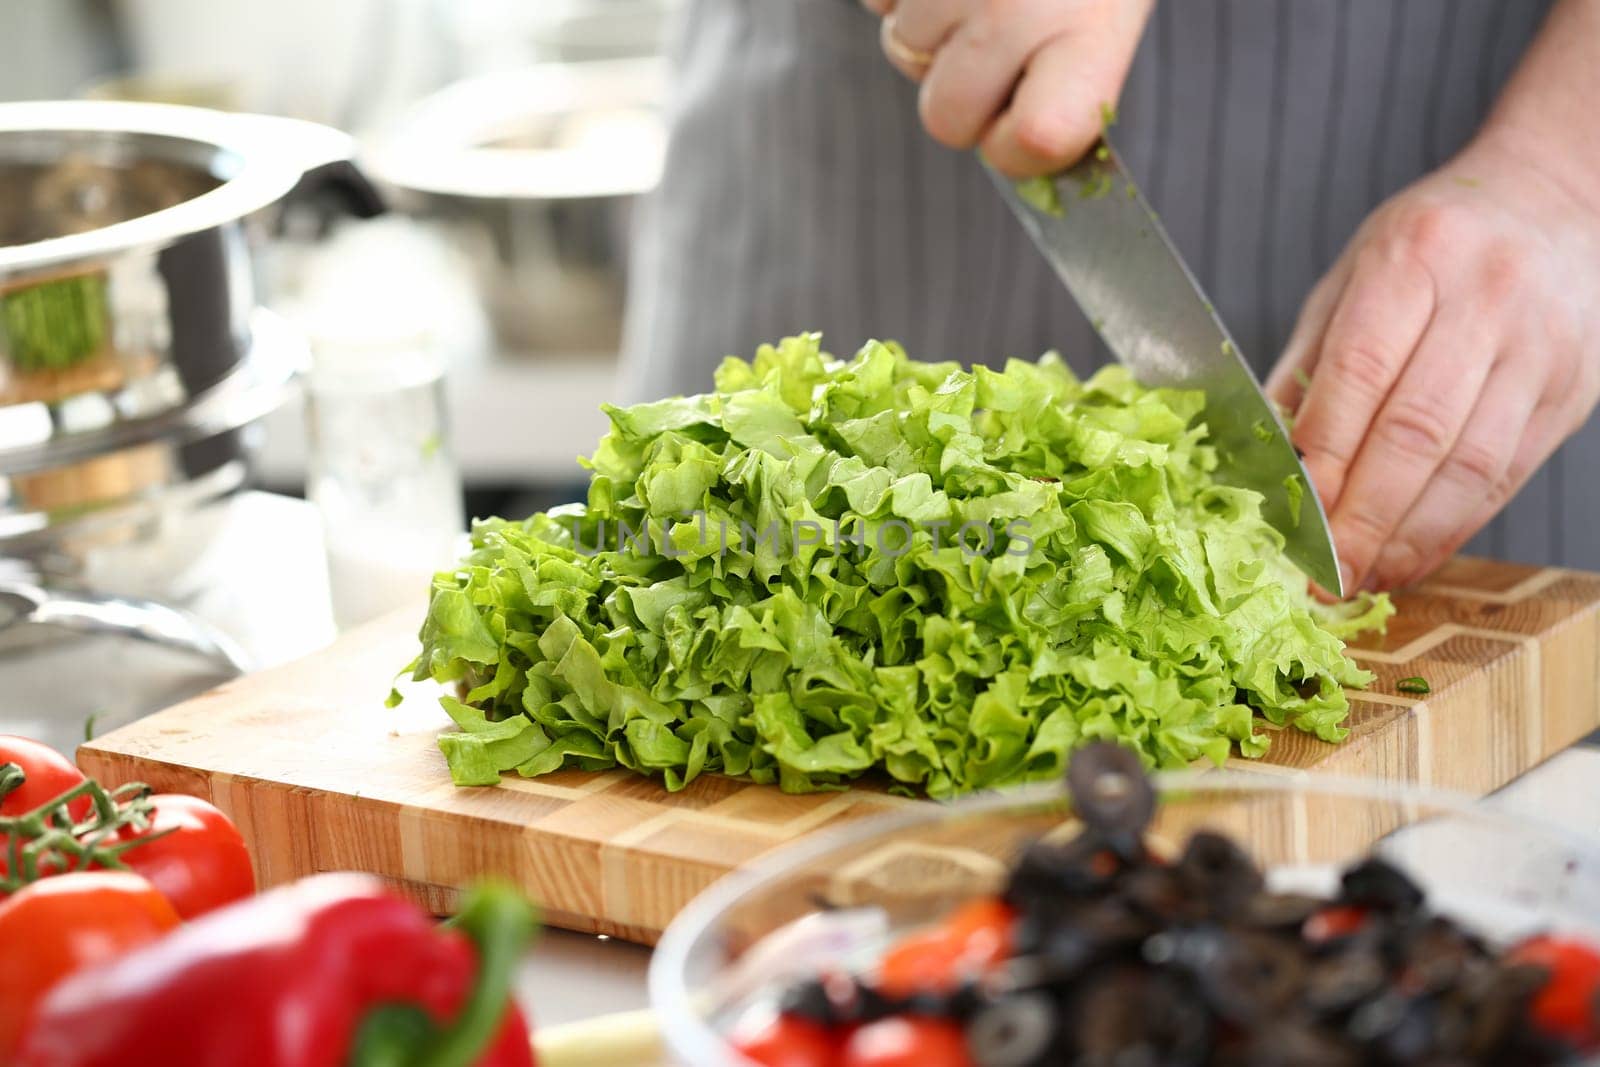 Hands of cook are preparing vegetable salad closeup. Cutting lettuce leaves and preparing vegetarian food